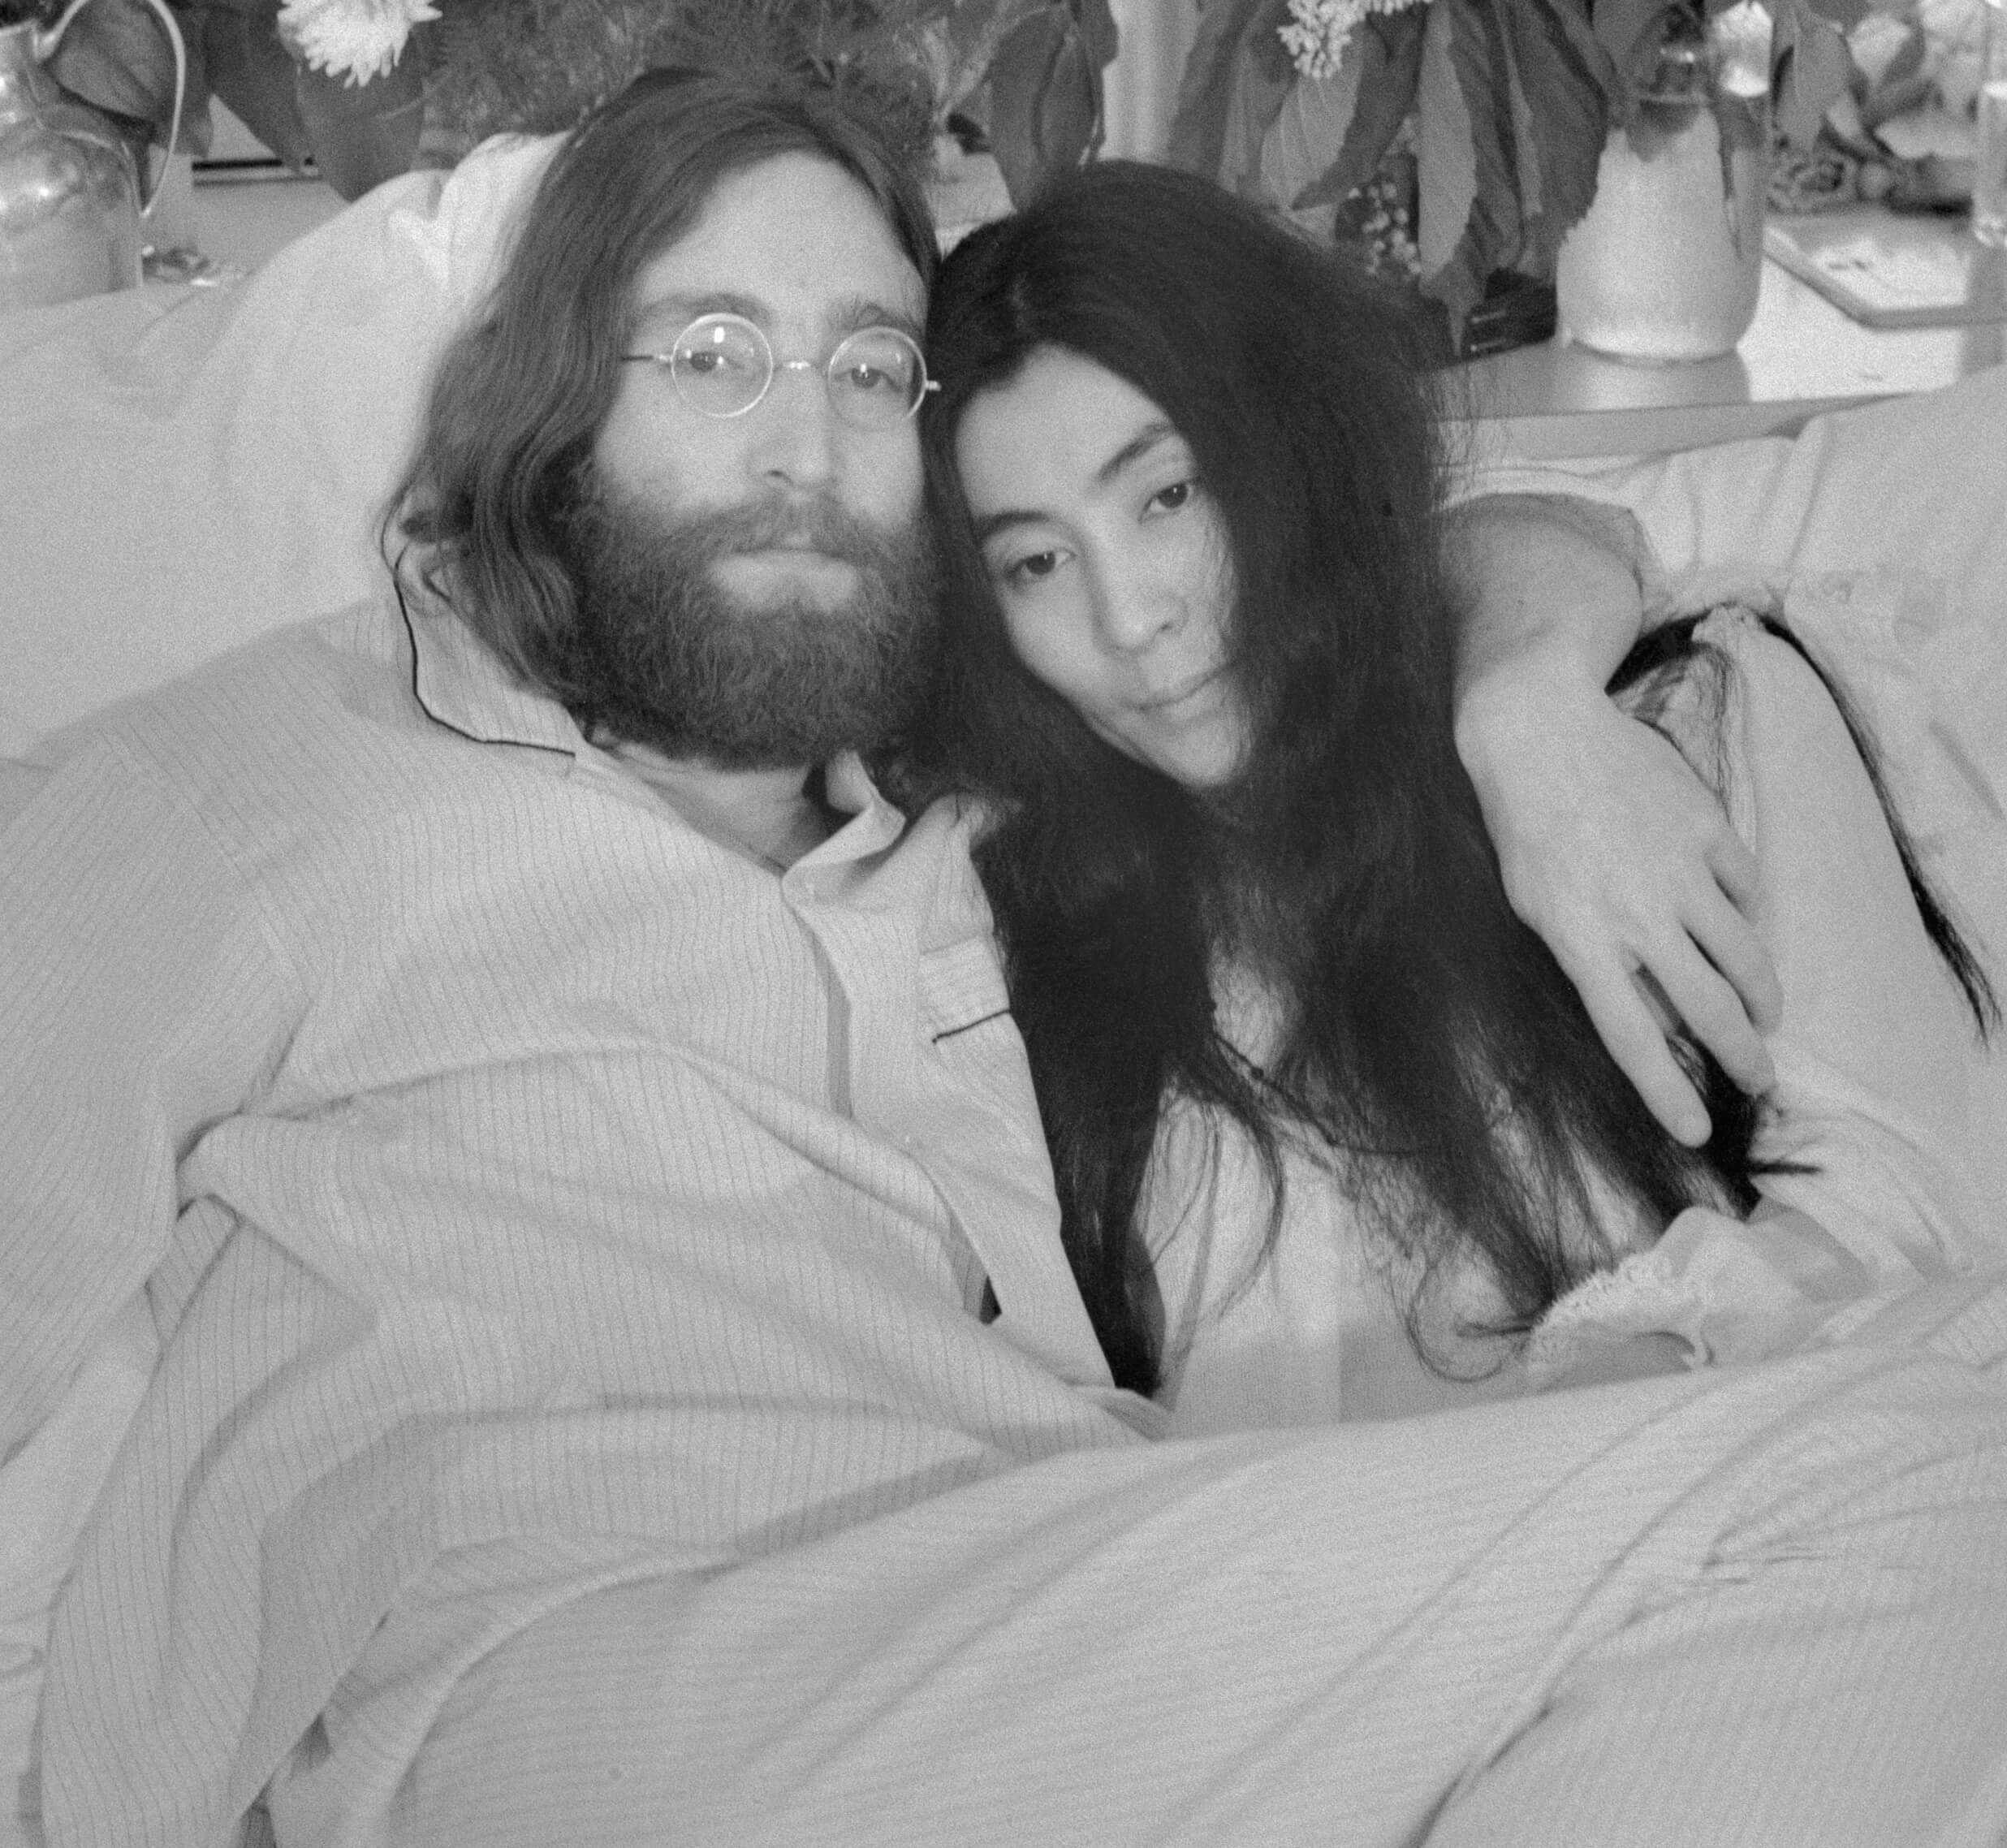 John Lennon and Yoko Ono in pajamas during The Beatles' "Revolution 9" era